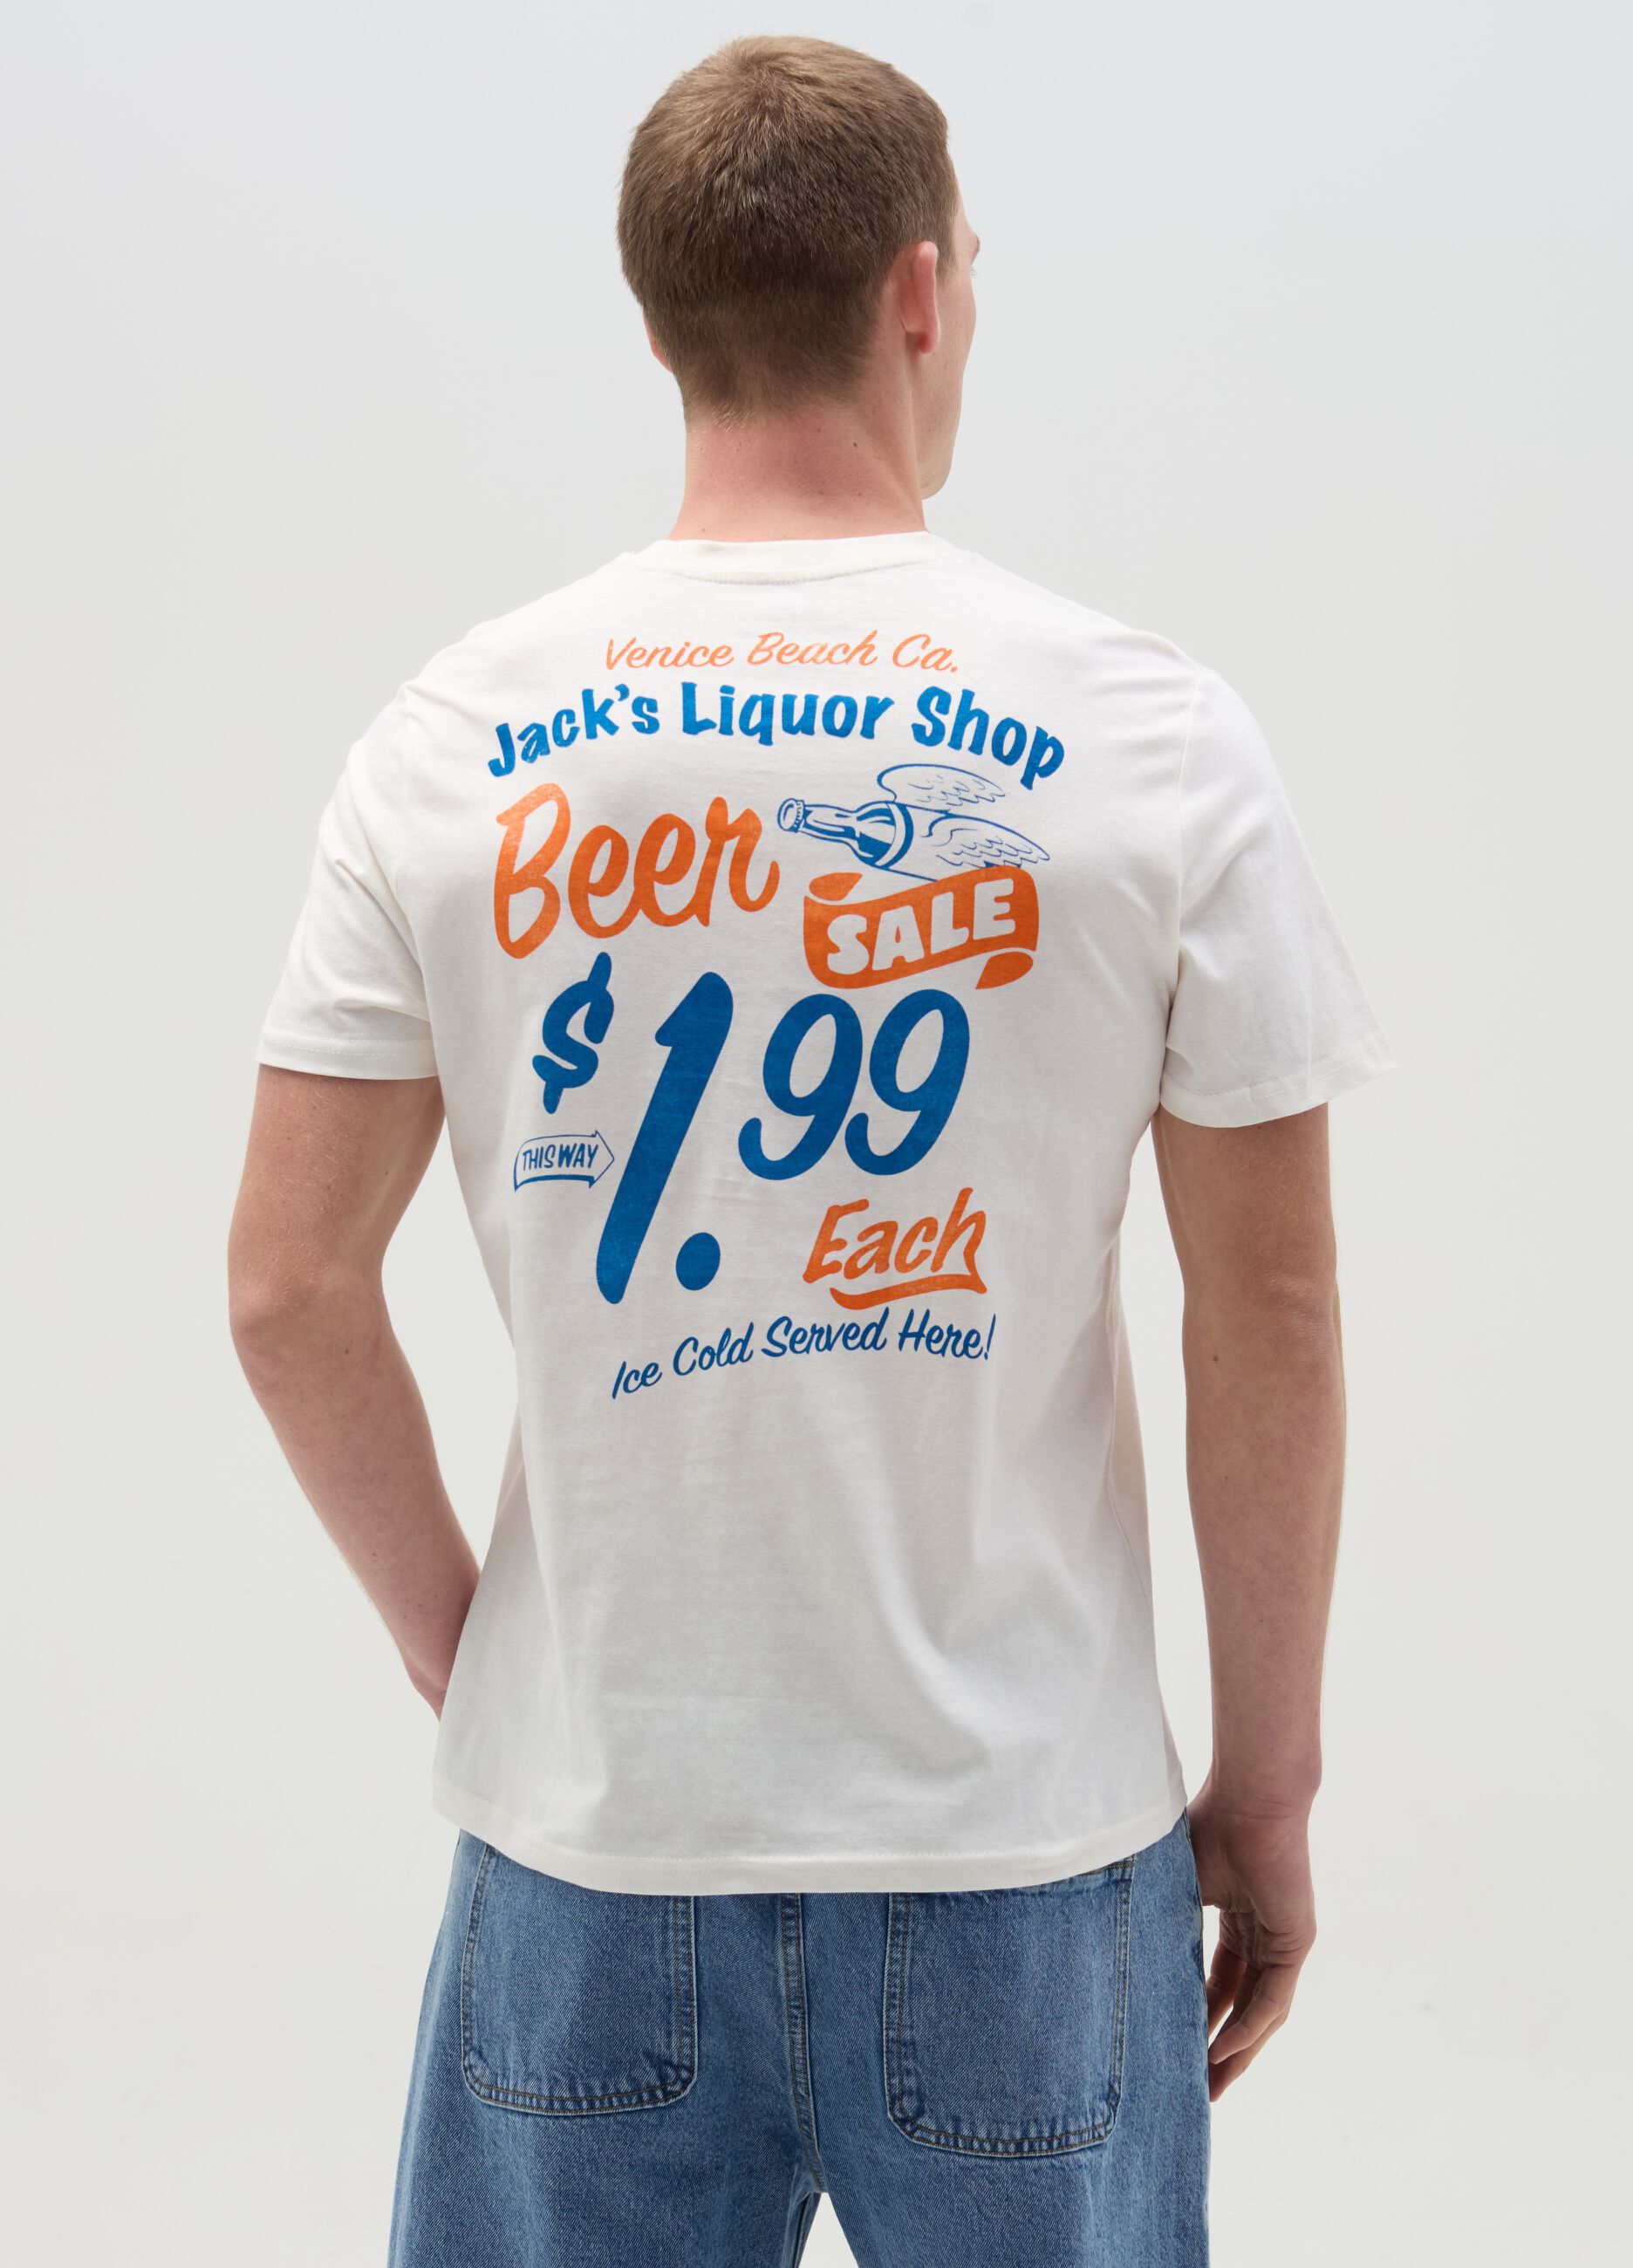 T-shirt with Venice Beach Liquor Shop print